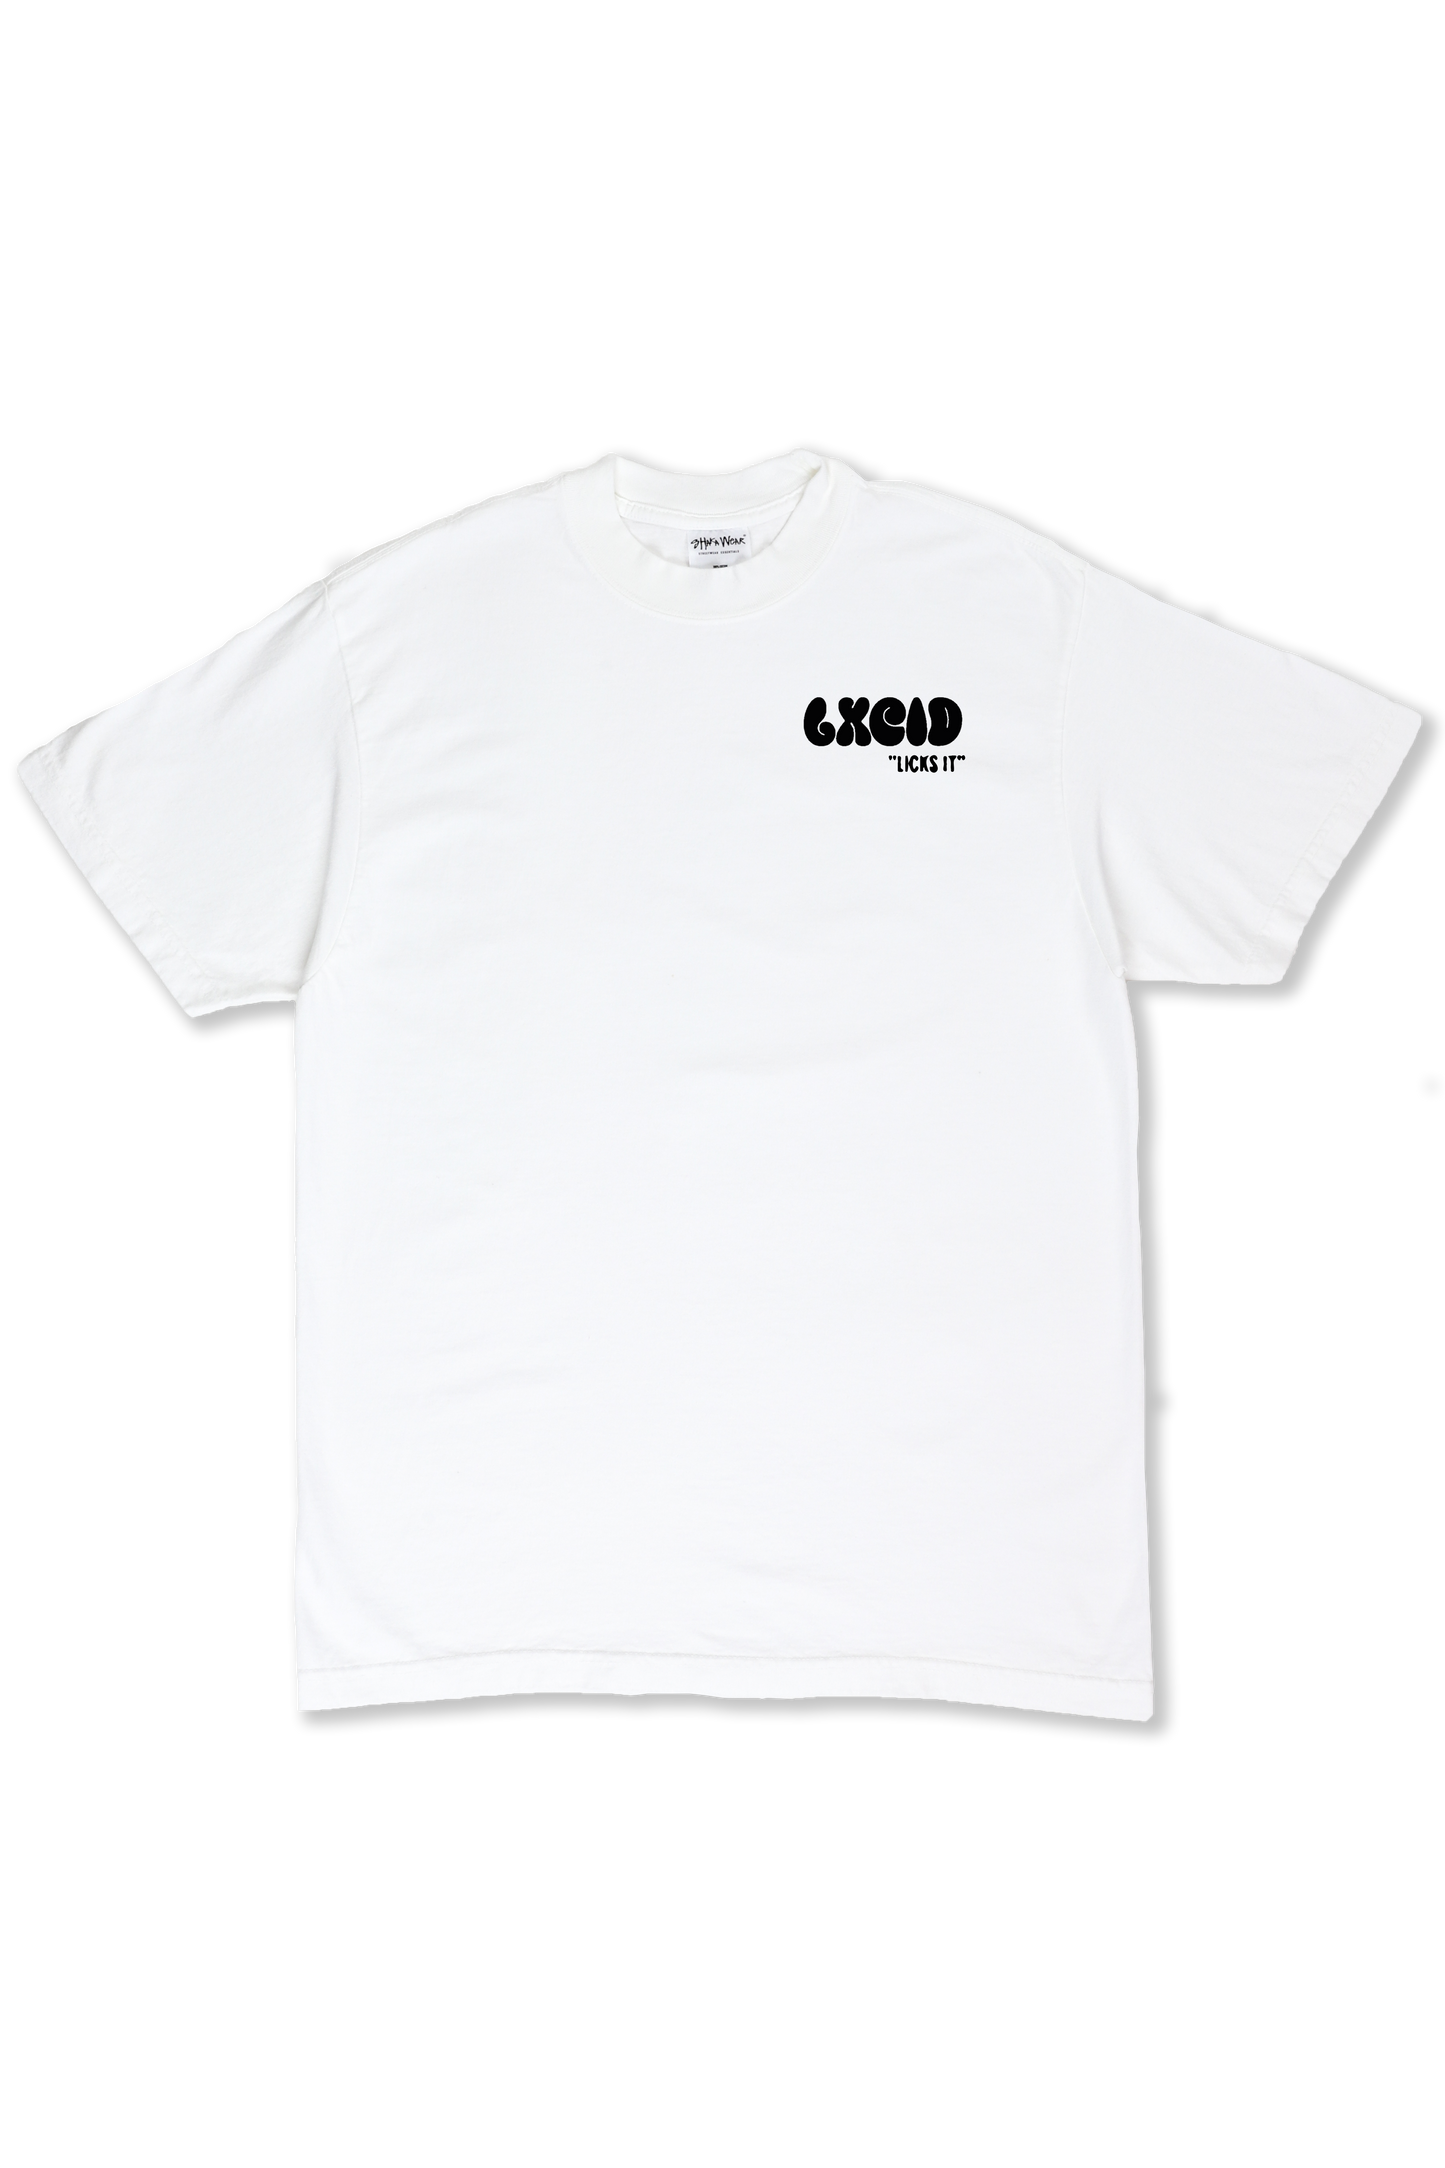 Lxcid "licks it" T-shirt